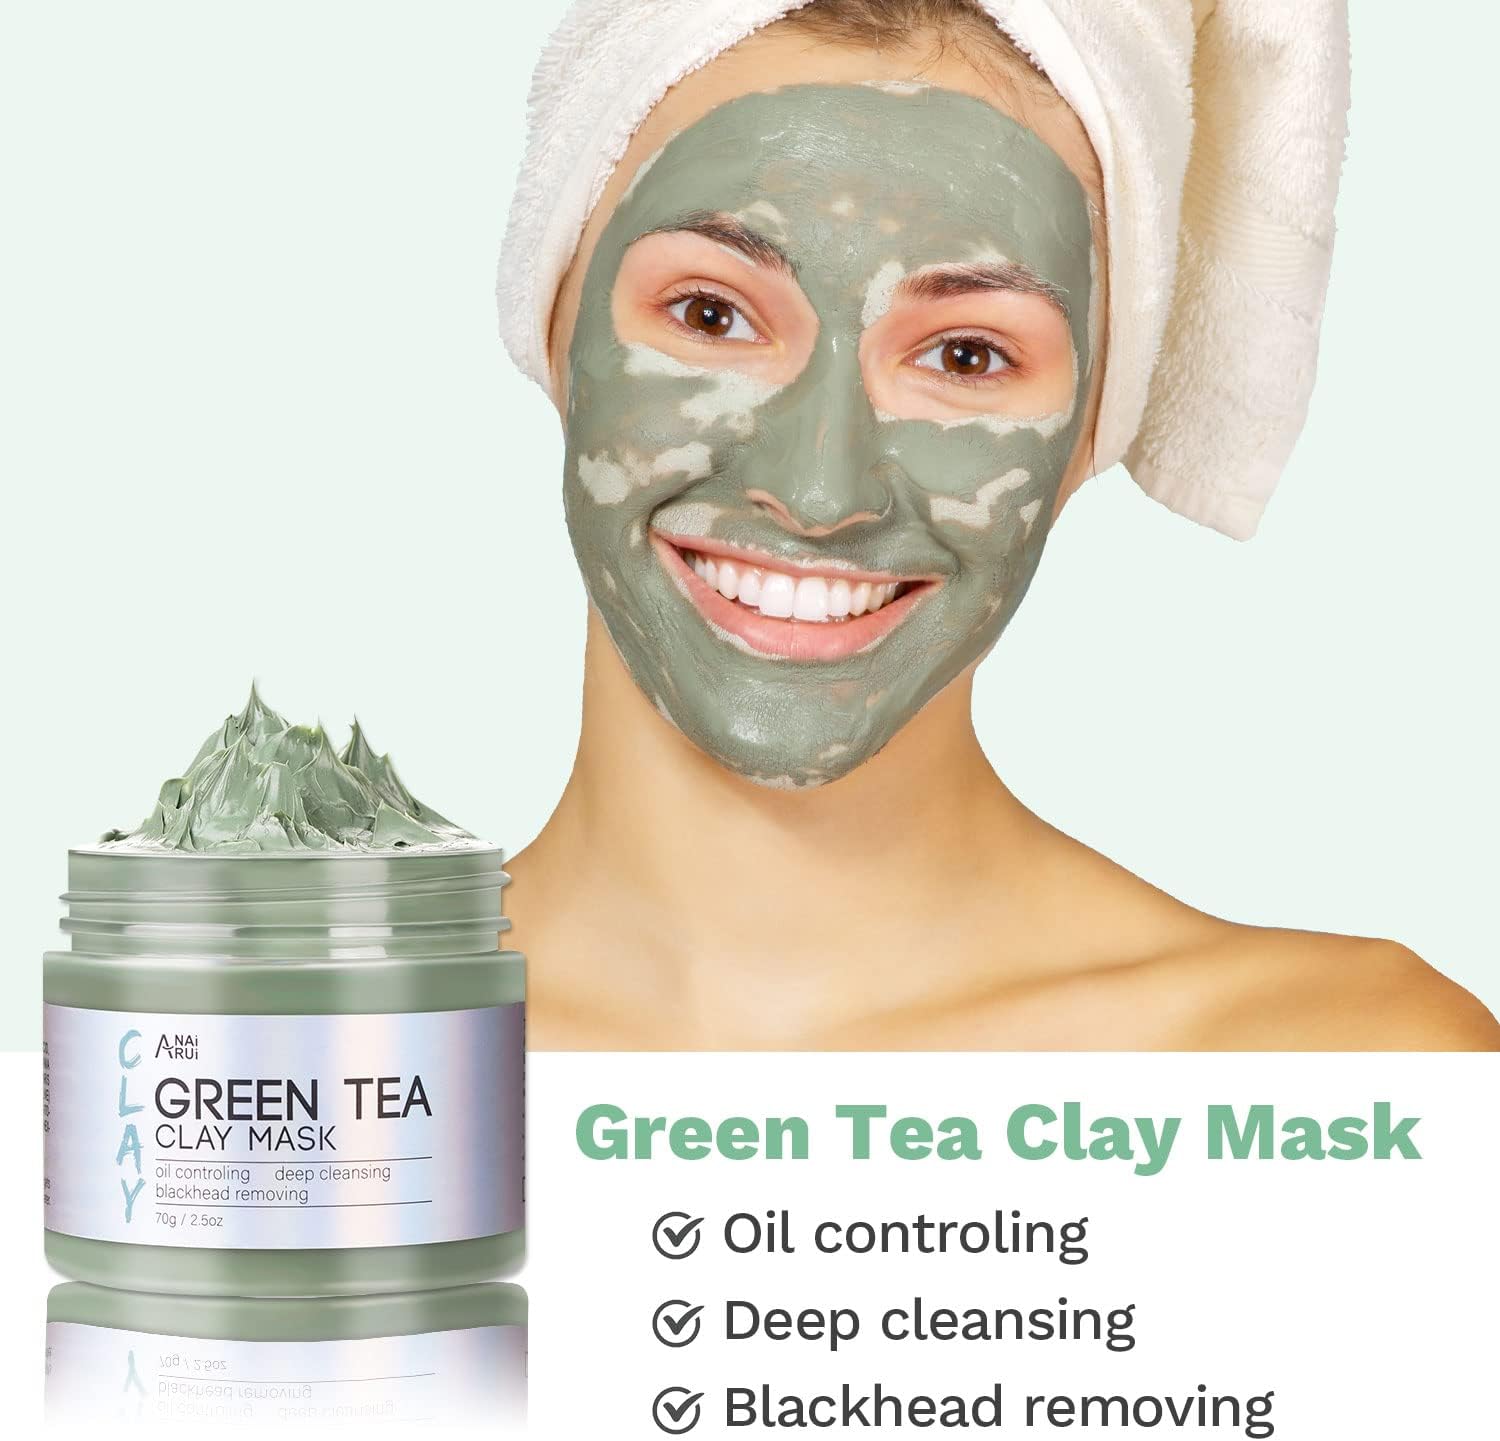 ANAI RUI Turmeric Clay Mask - Green Tea and Dead Sea Minerals, Spa Facial Mask Set for Pore Treatment/Smooth/Clarify, Indoor Use, 2.5 oz each